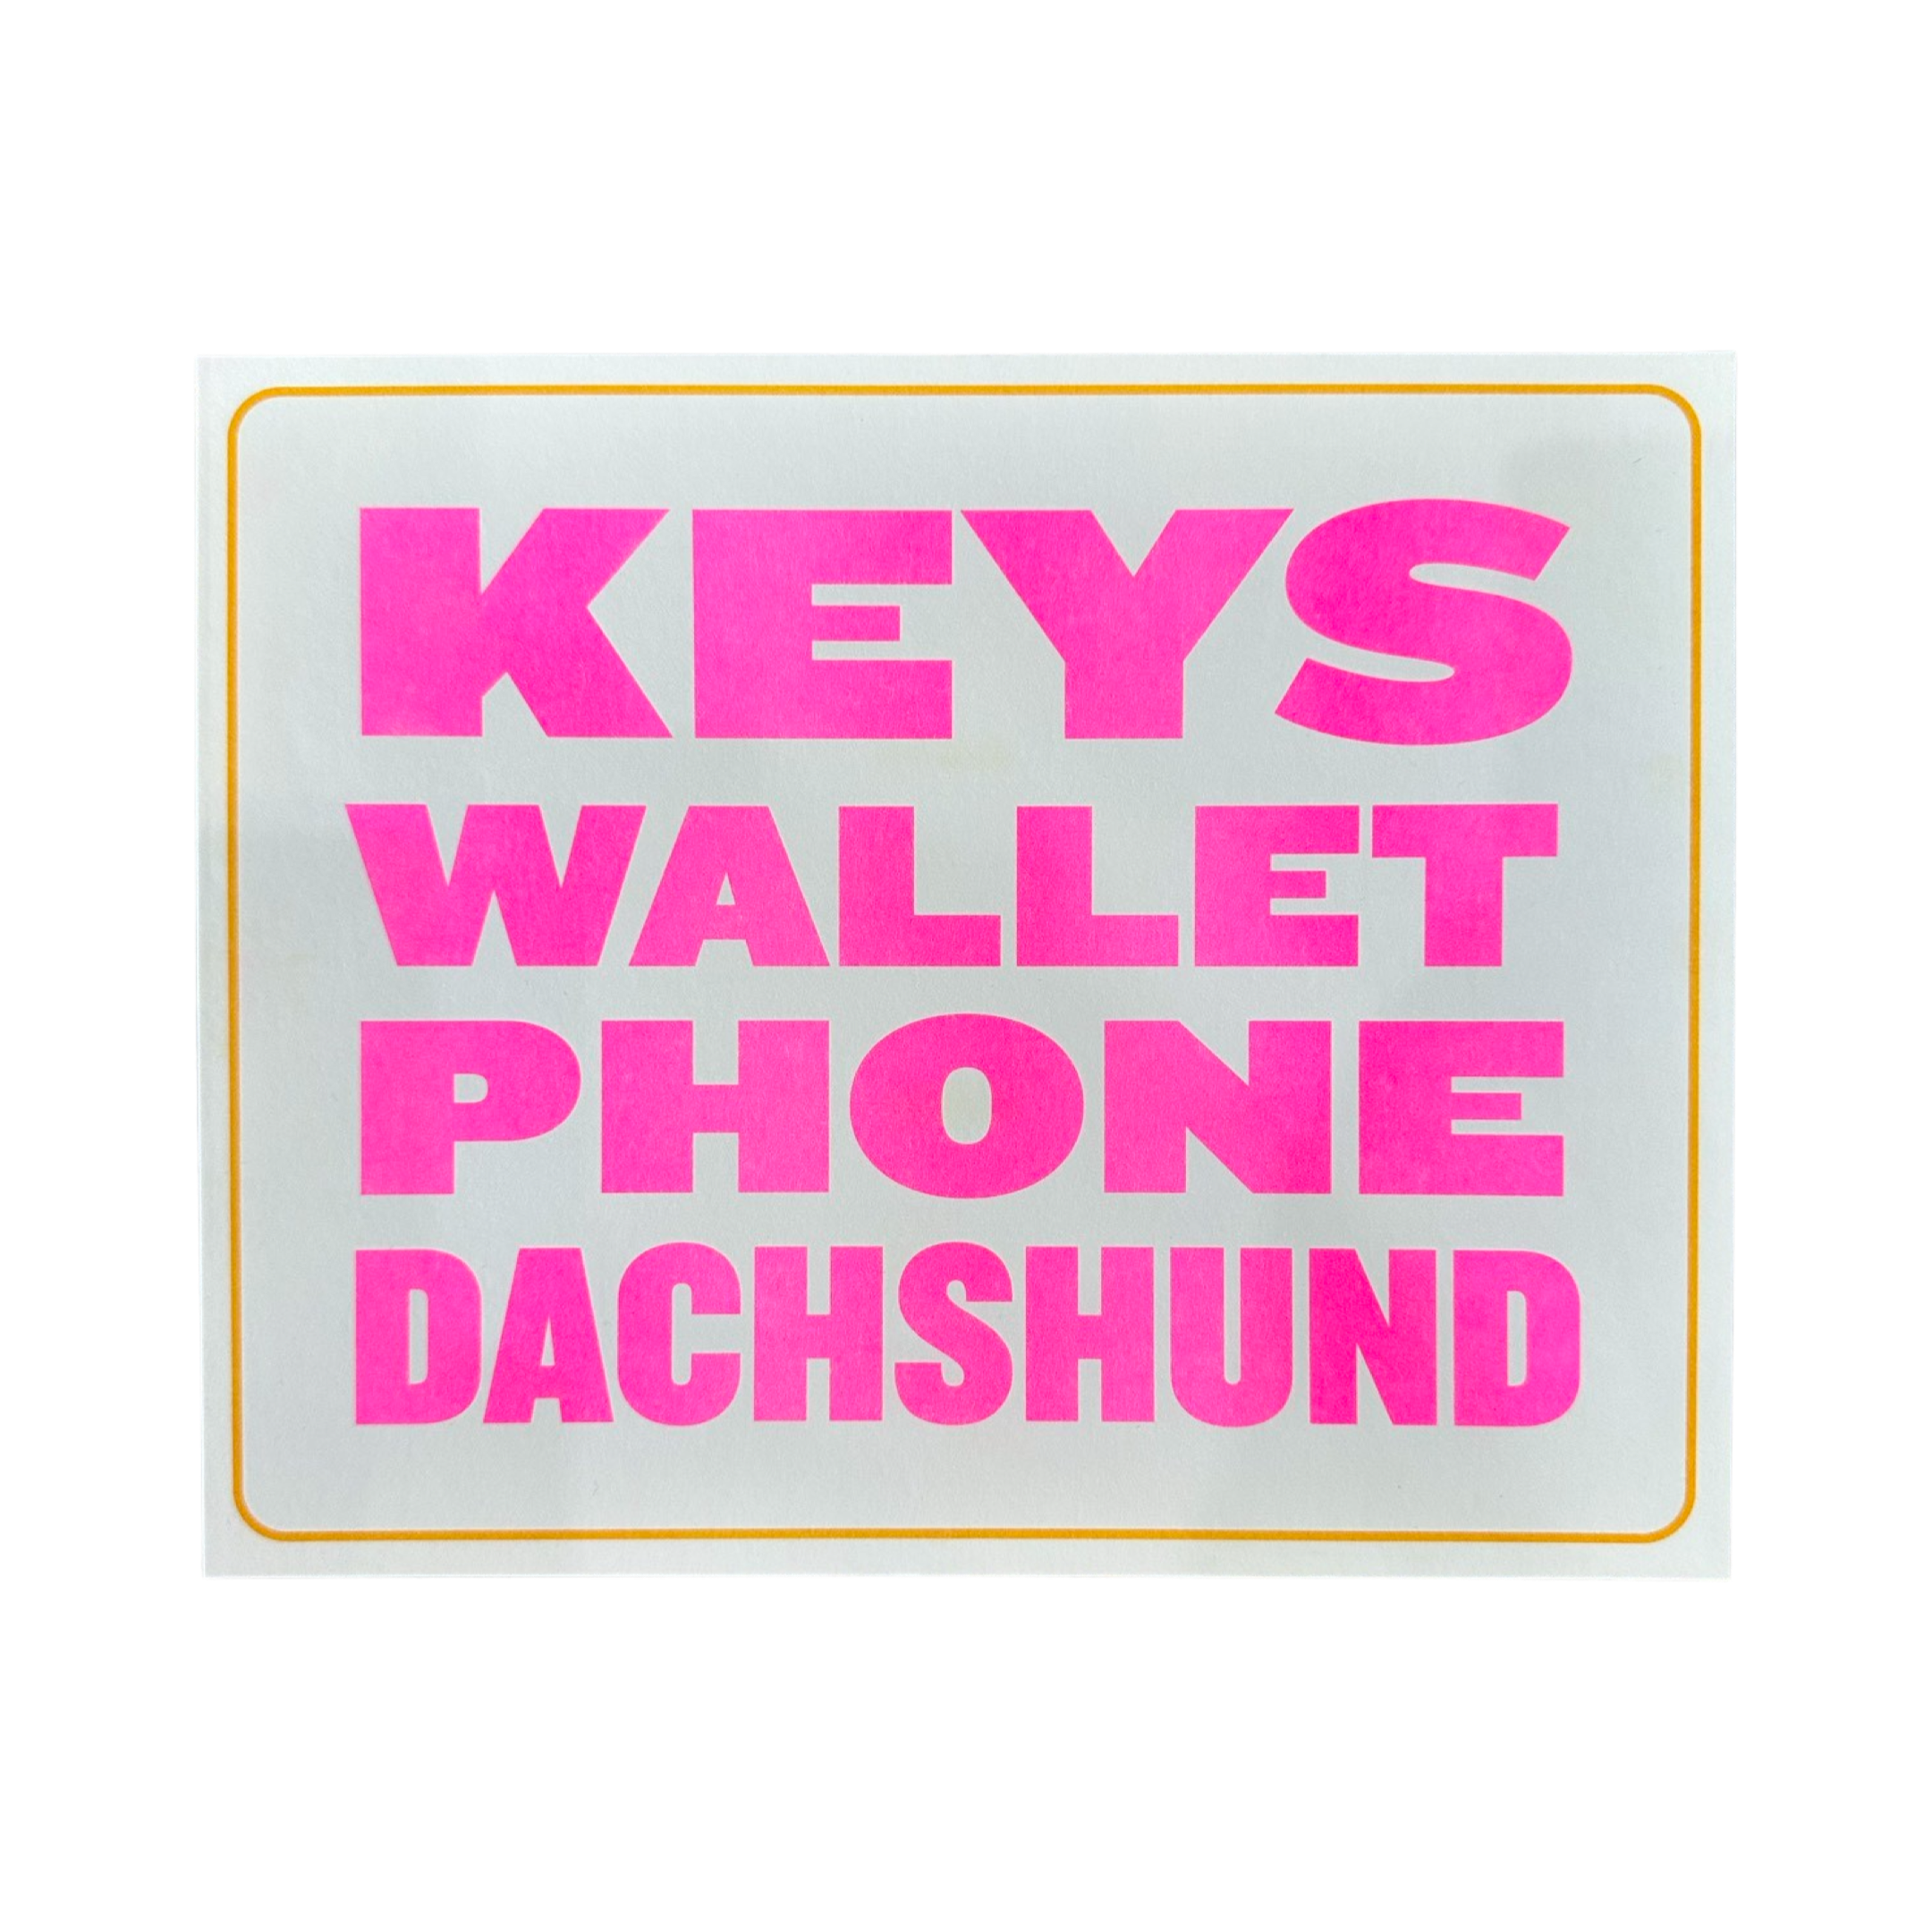 Keys Wallet Phone Dachshund Riso Print